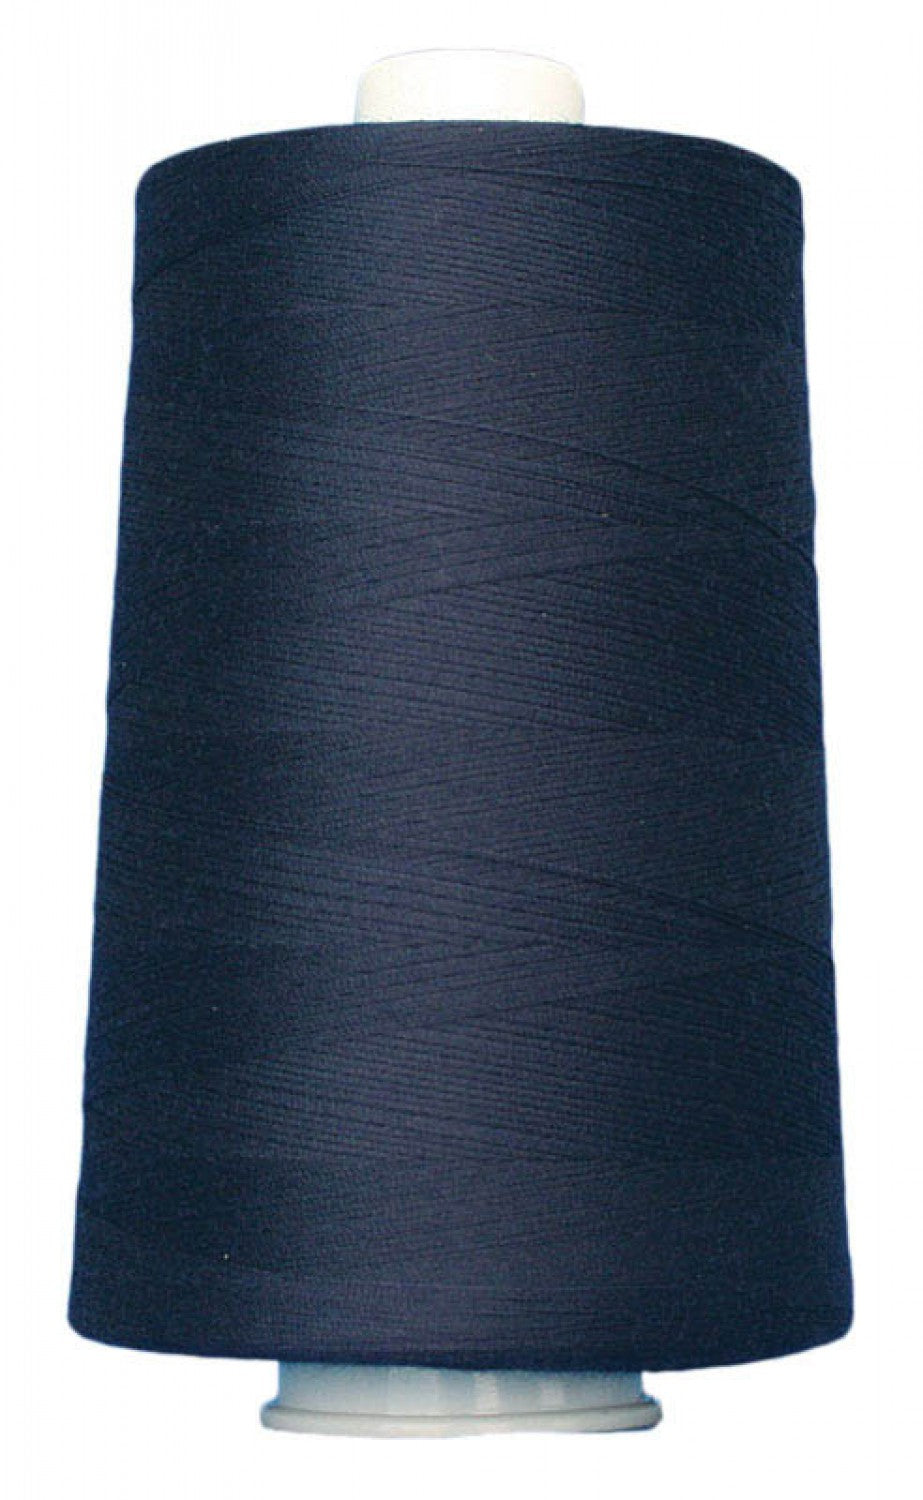 Omni Polyester Thread 40wt 6000yd Navy Blue by Superior Threads